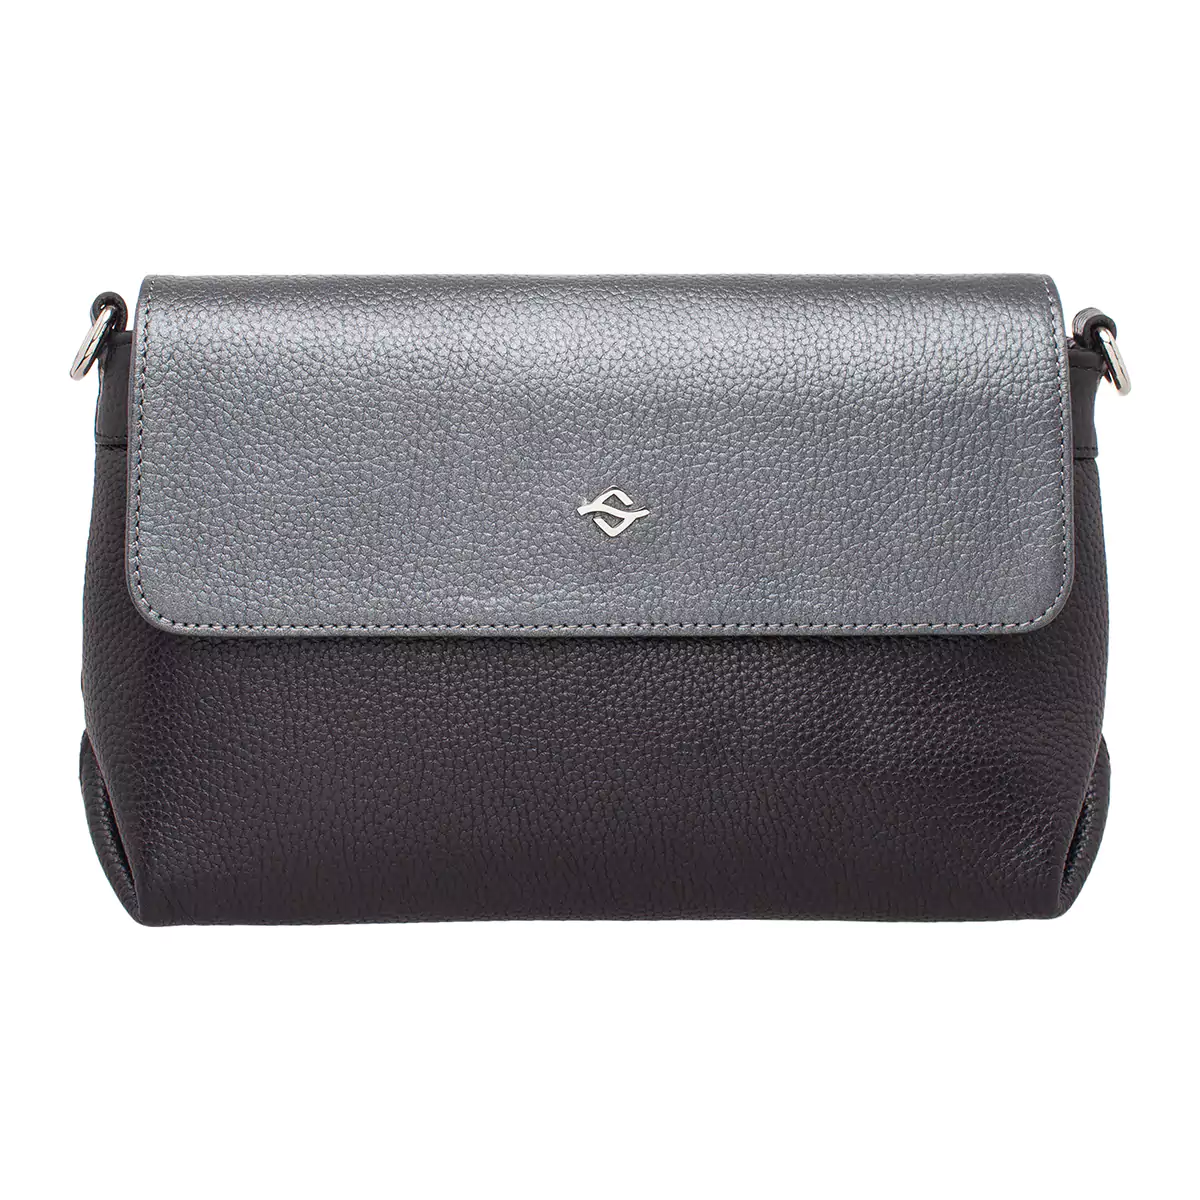 Женская сумка Esher Black/Grey